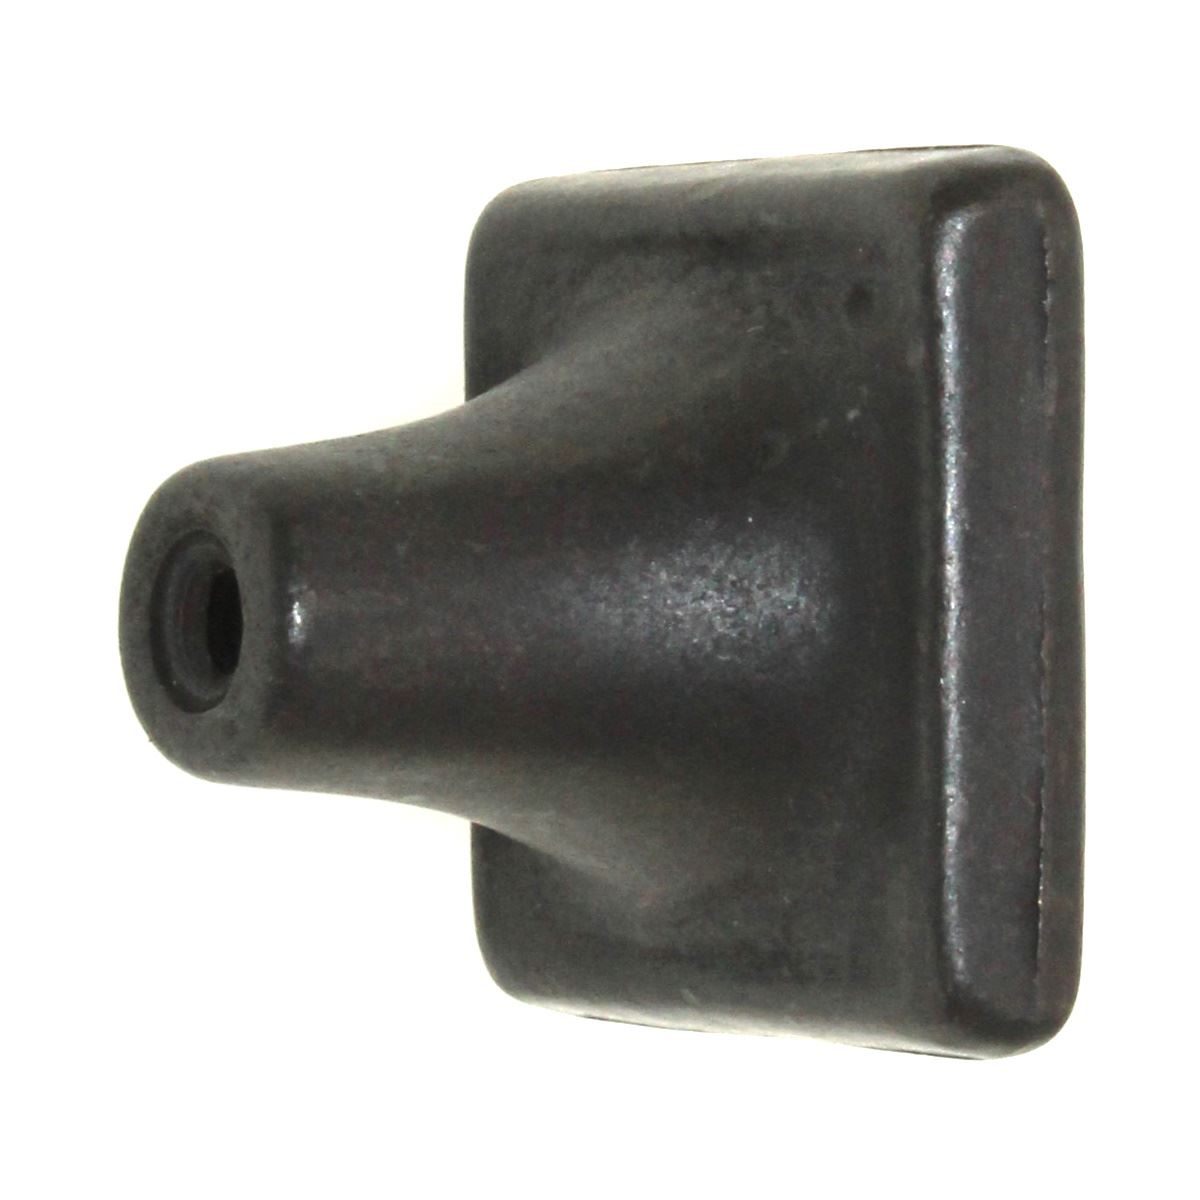 Keeler Carbonite 1 1/4" Rustic Square Cabinet Knob Black Iron P3670-BI